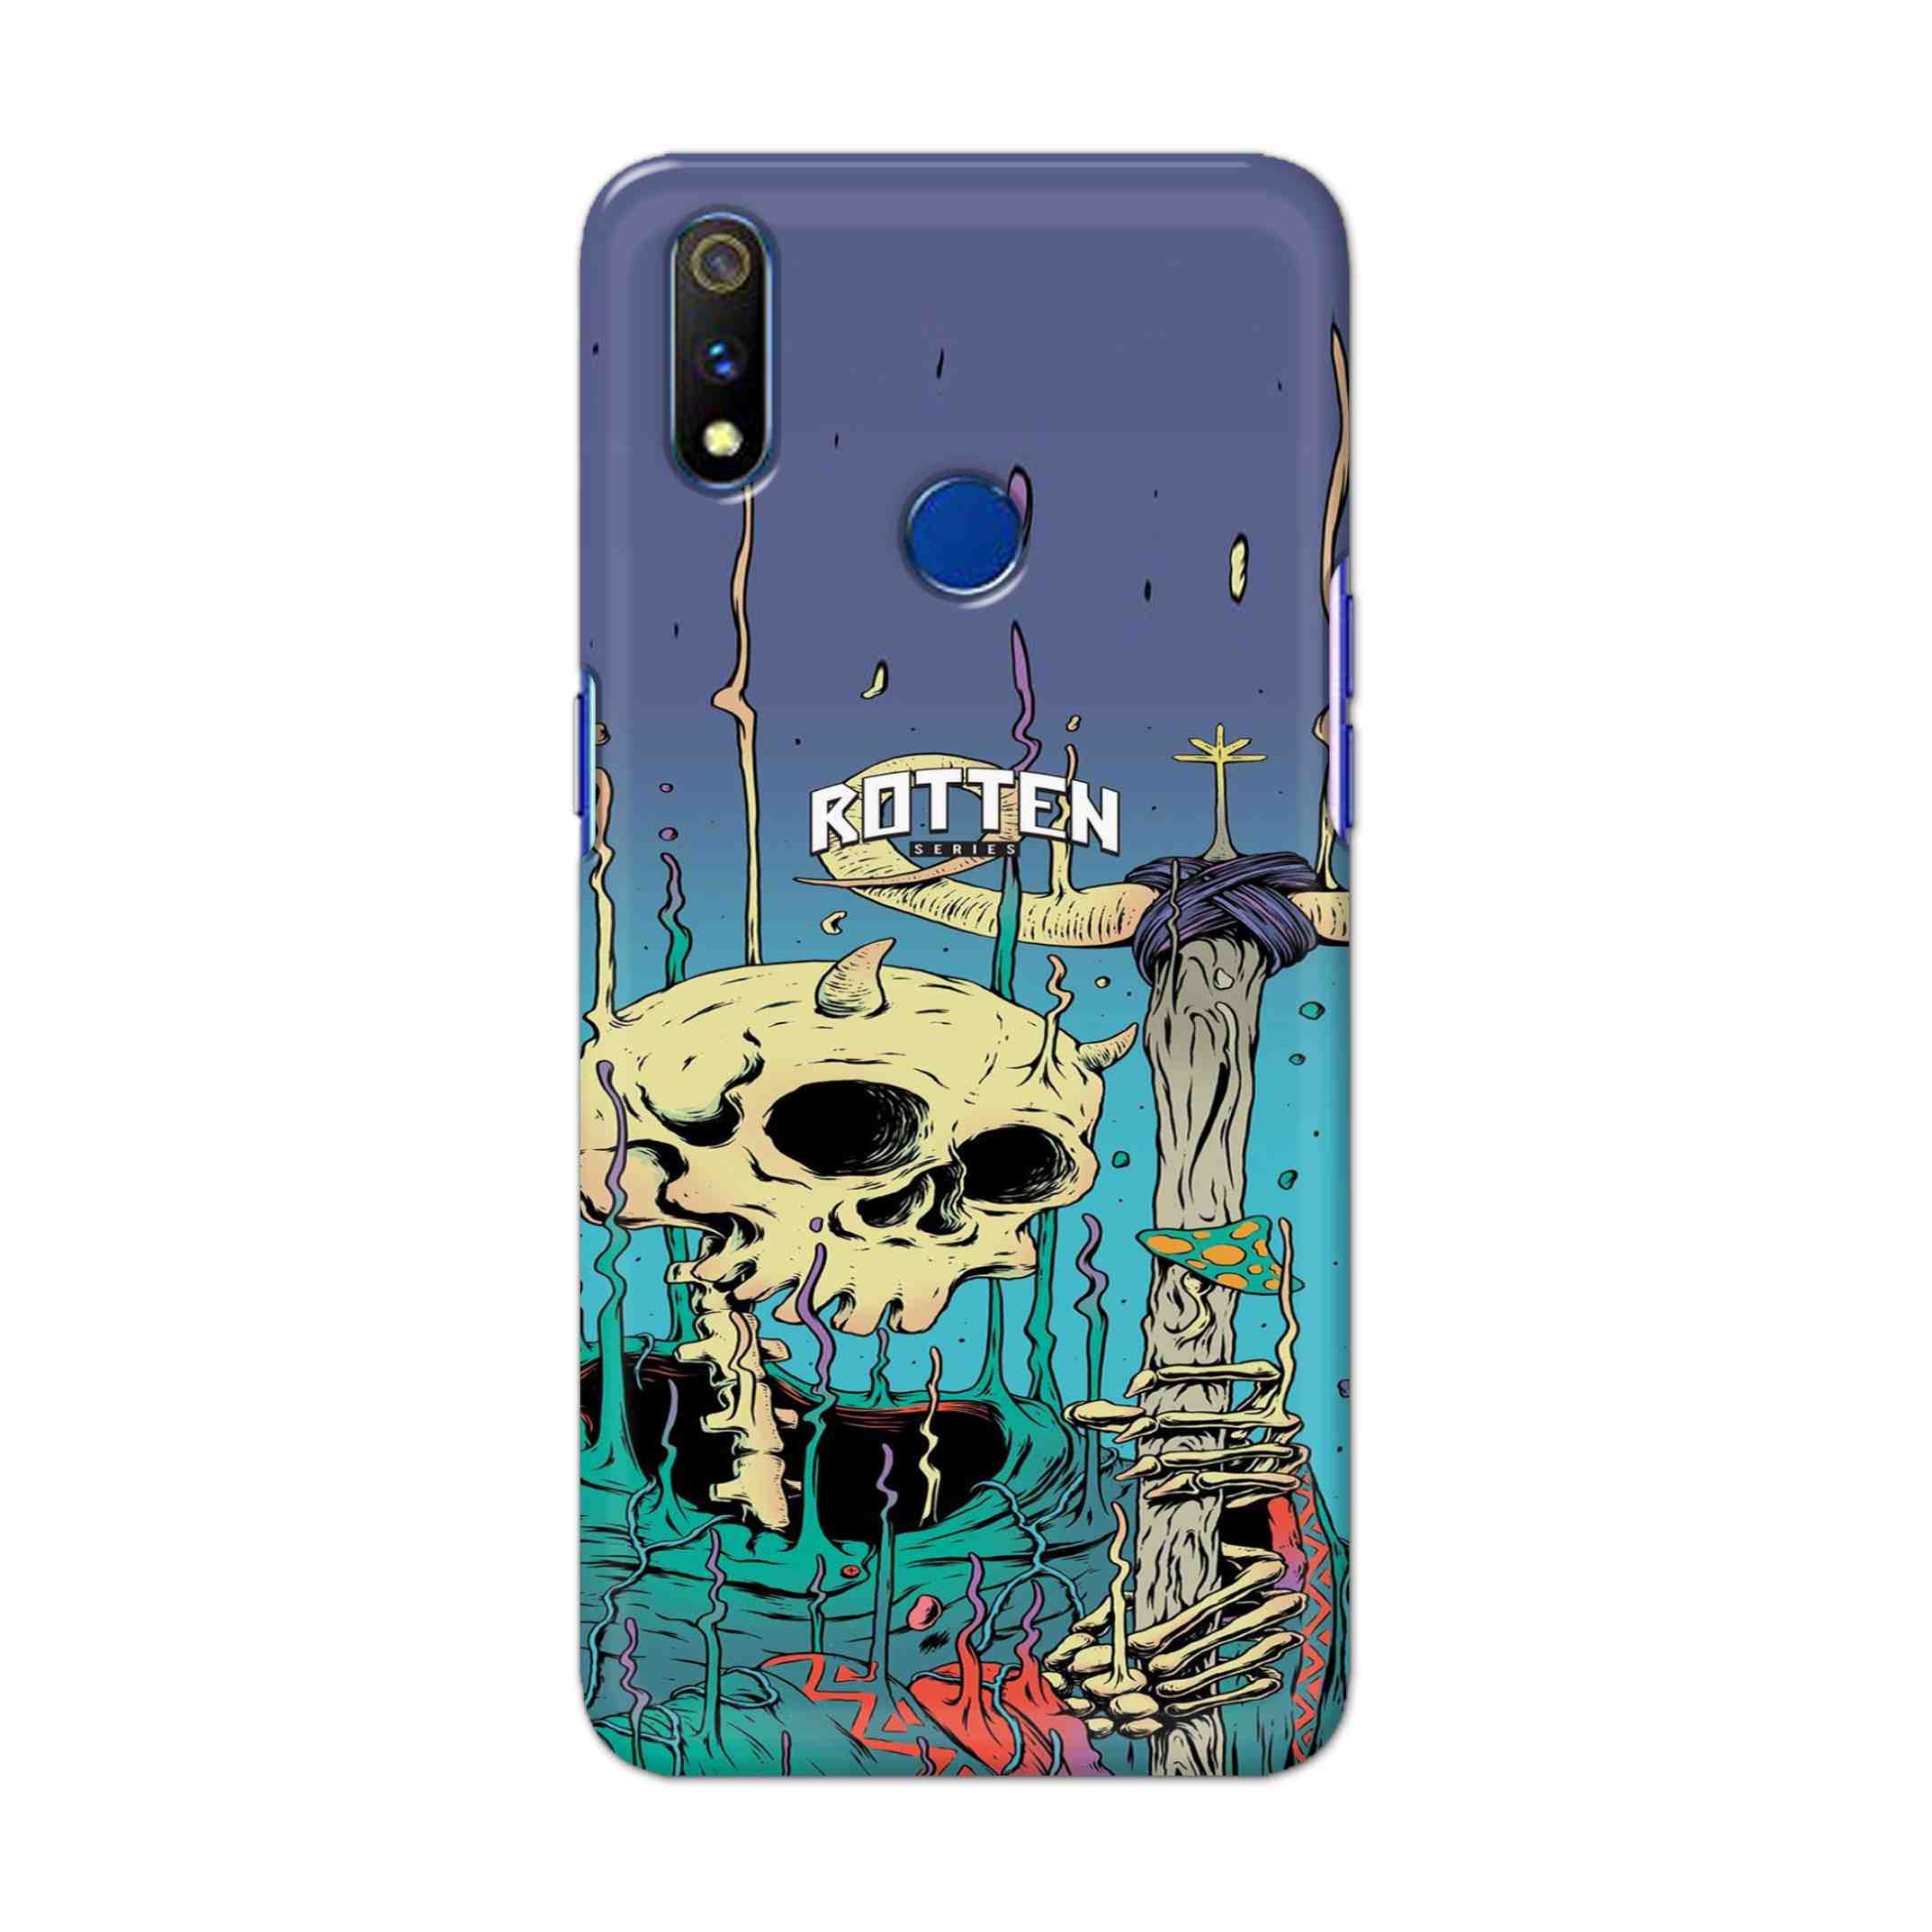 Buy Skull Hard Back Mobile Phone Case Cover For Realme 3 Pro Online